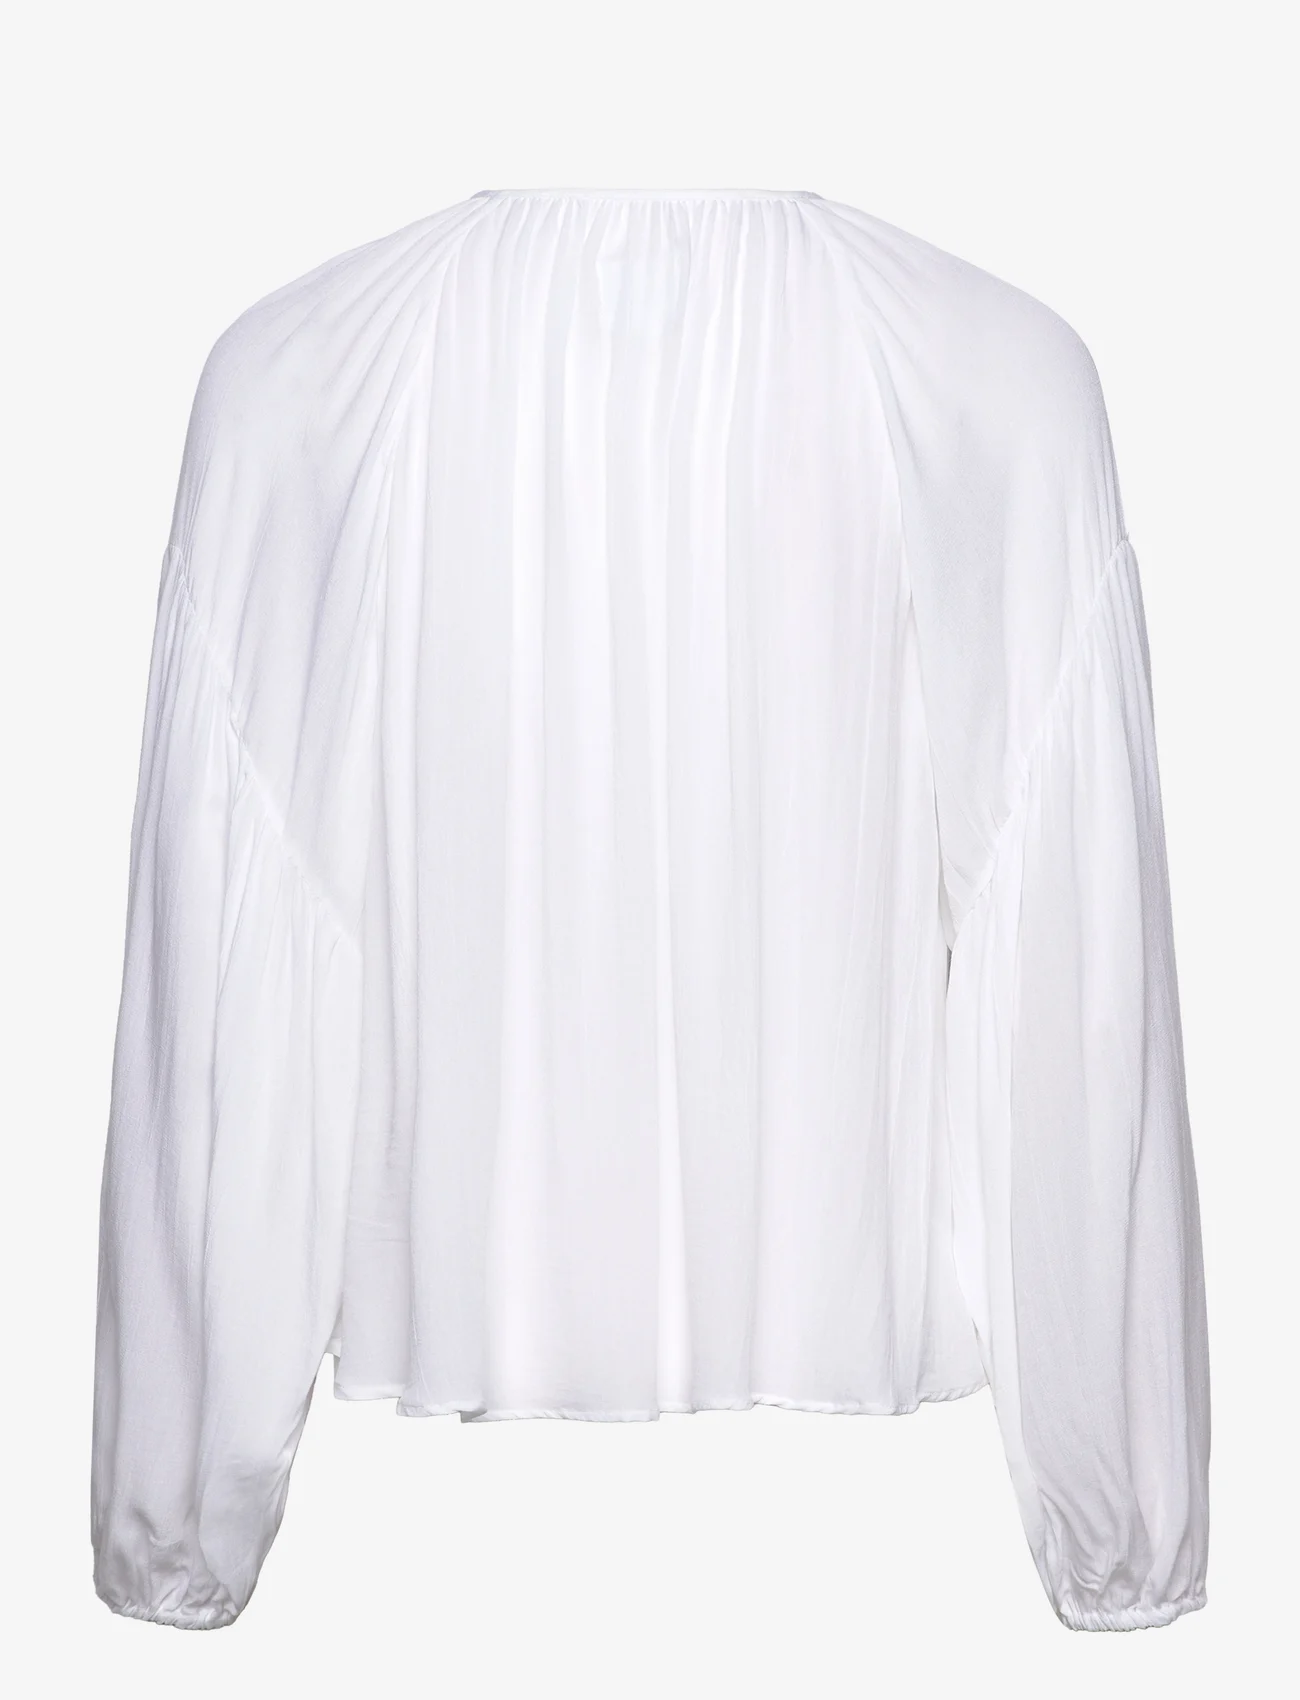 hálo - USVA CREPE BLOUSE - blouses met lange mouwen - white - 1